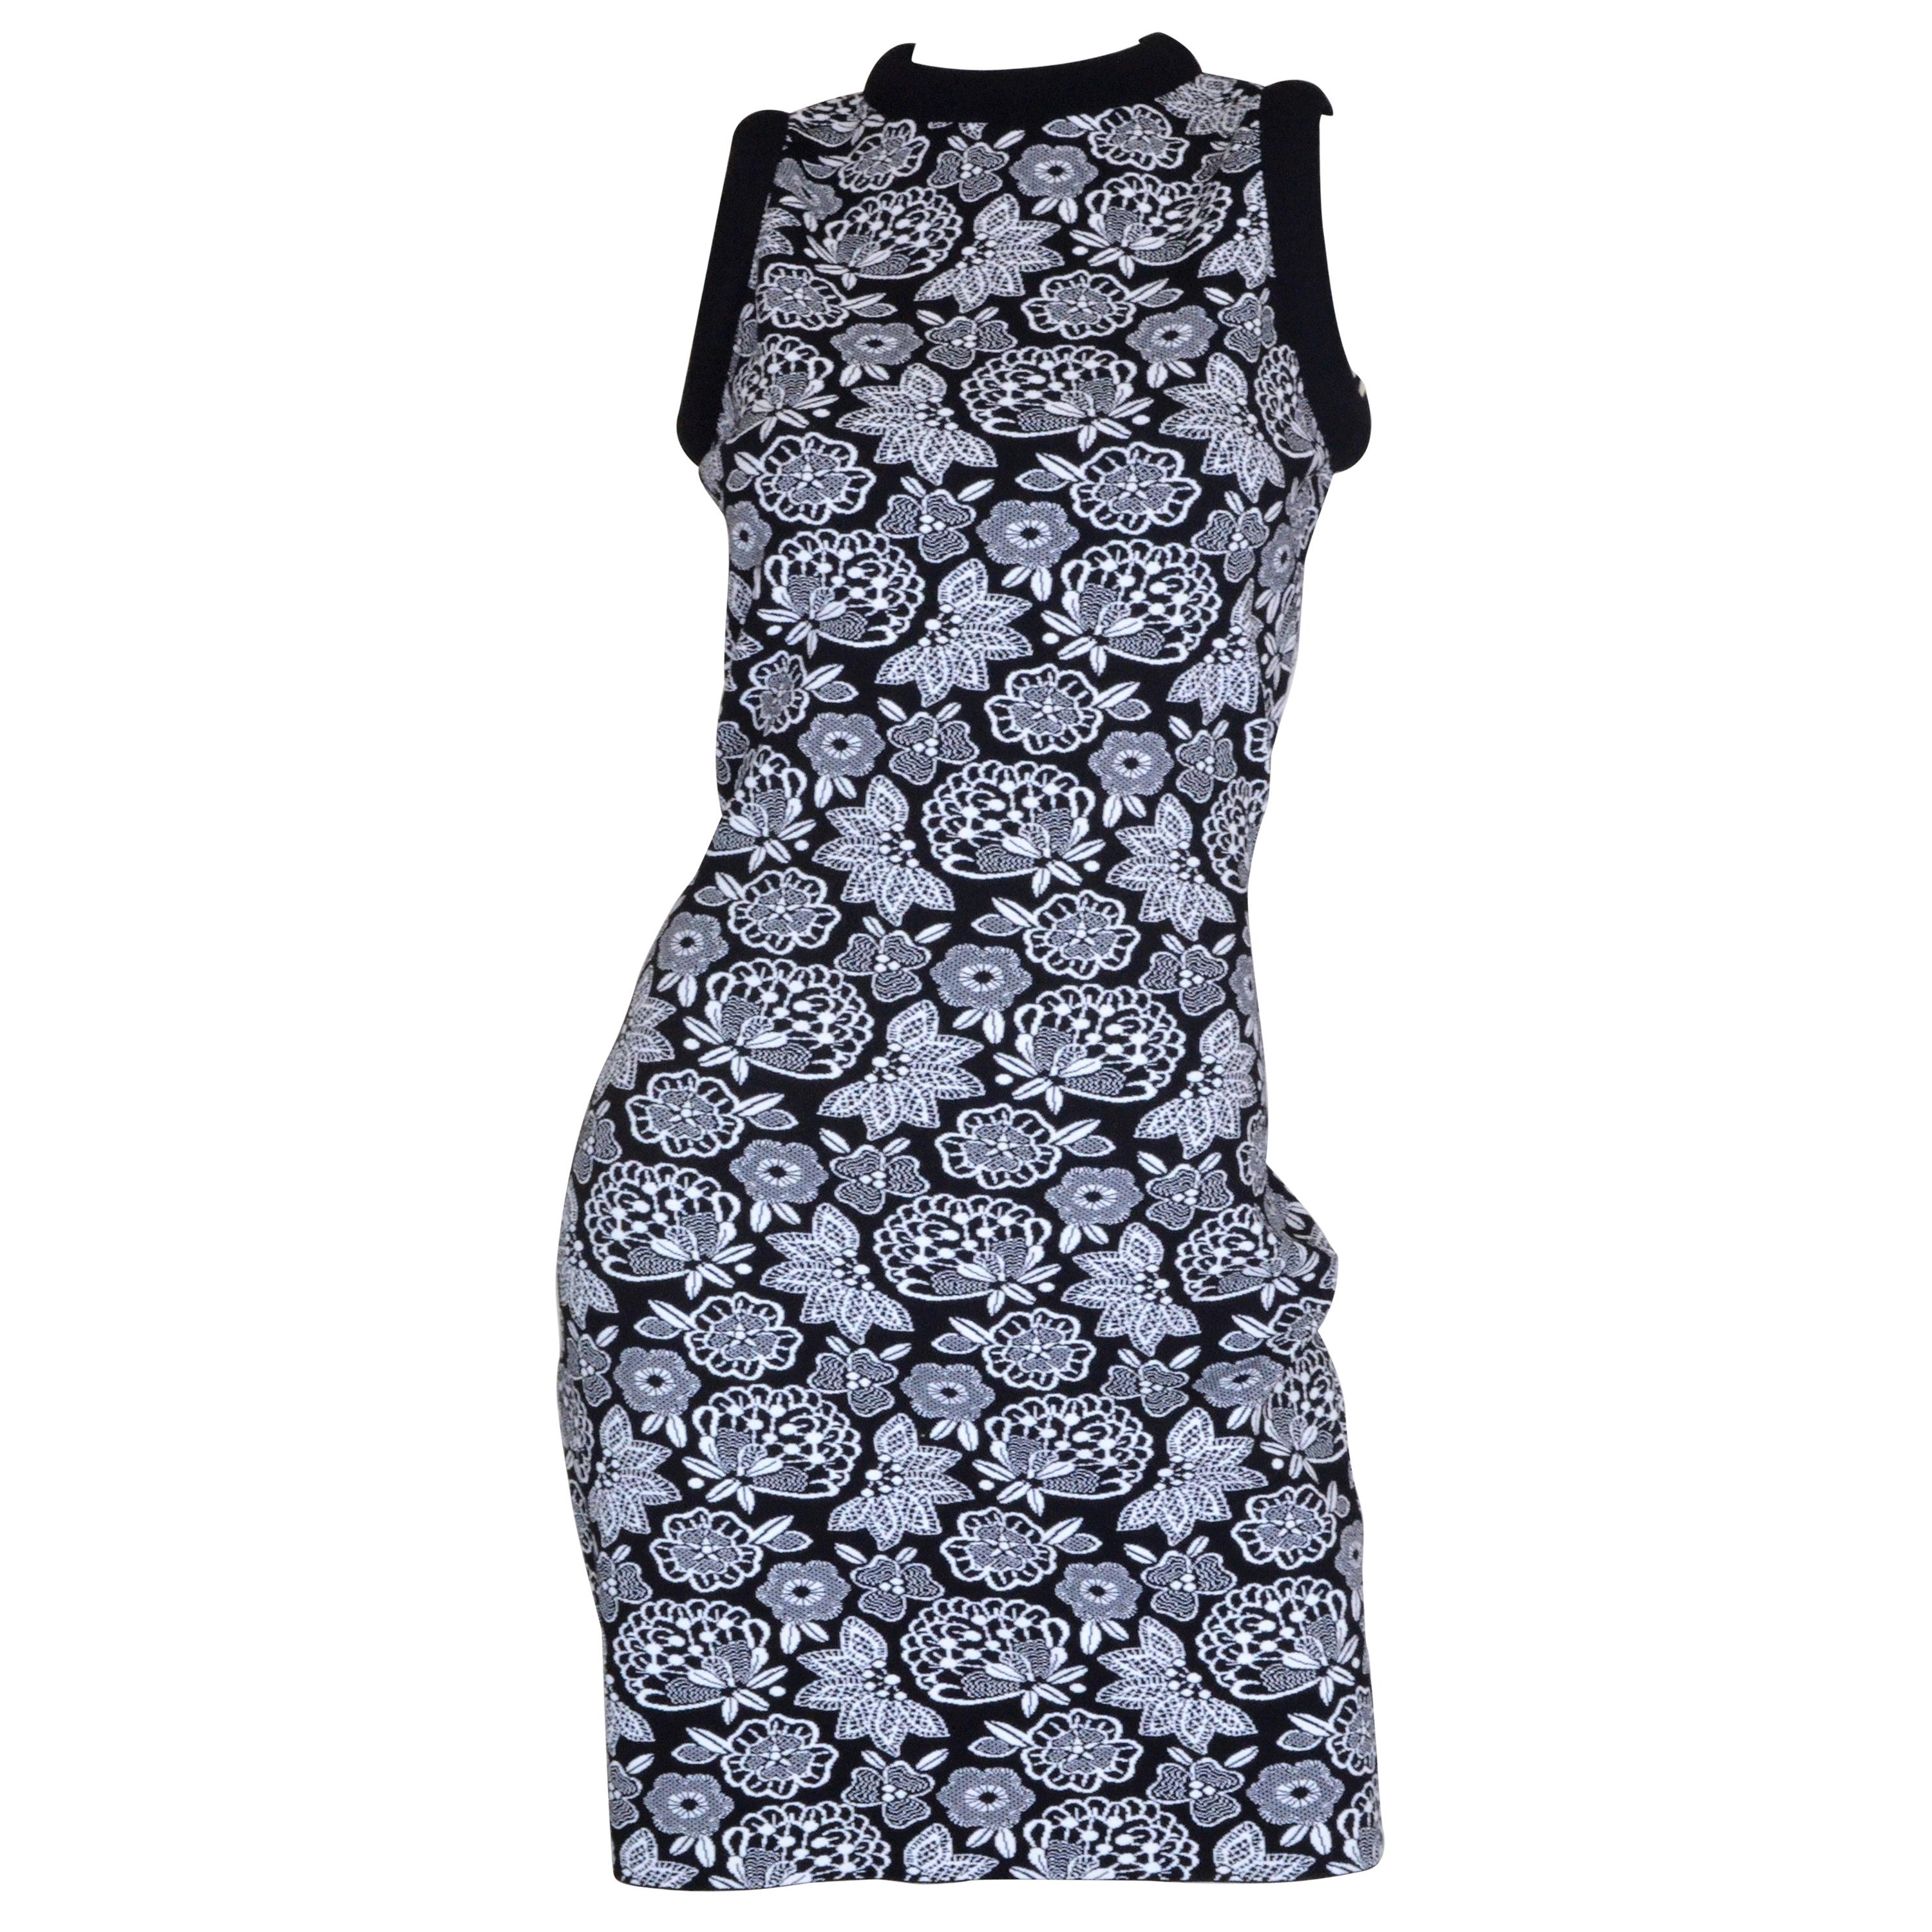 Christopher Kane: Dresses, Skirts & More - 31 For Sale at 1stdibs 